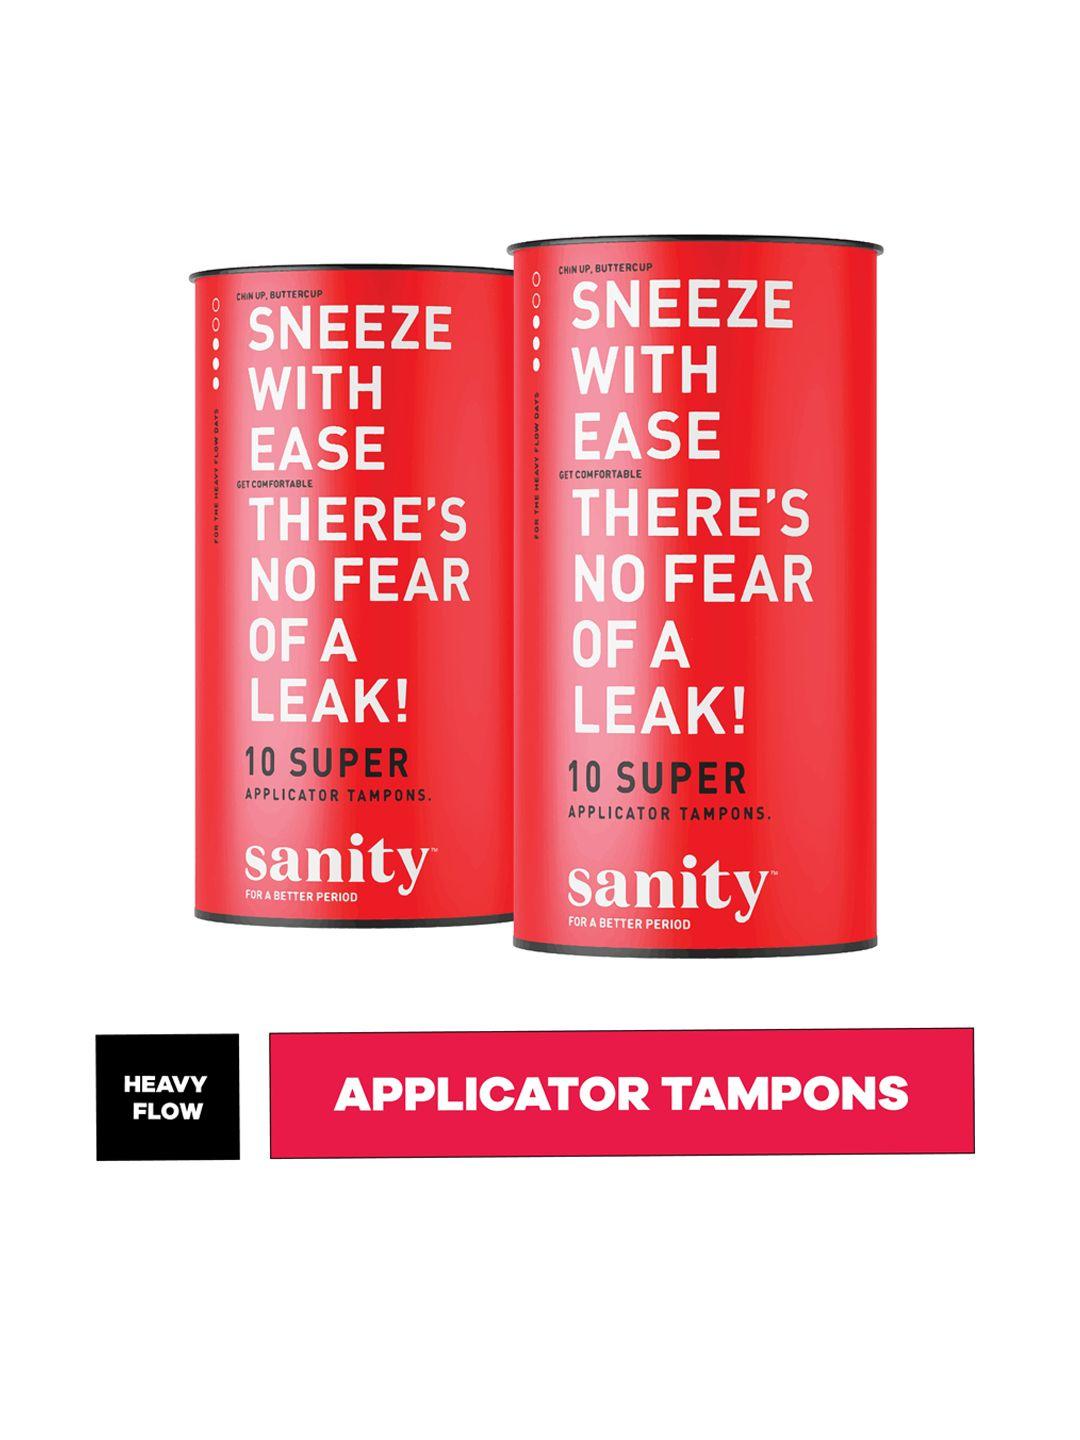 sanity pack of 20 super applicator tampons